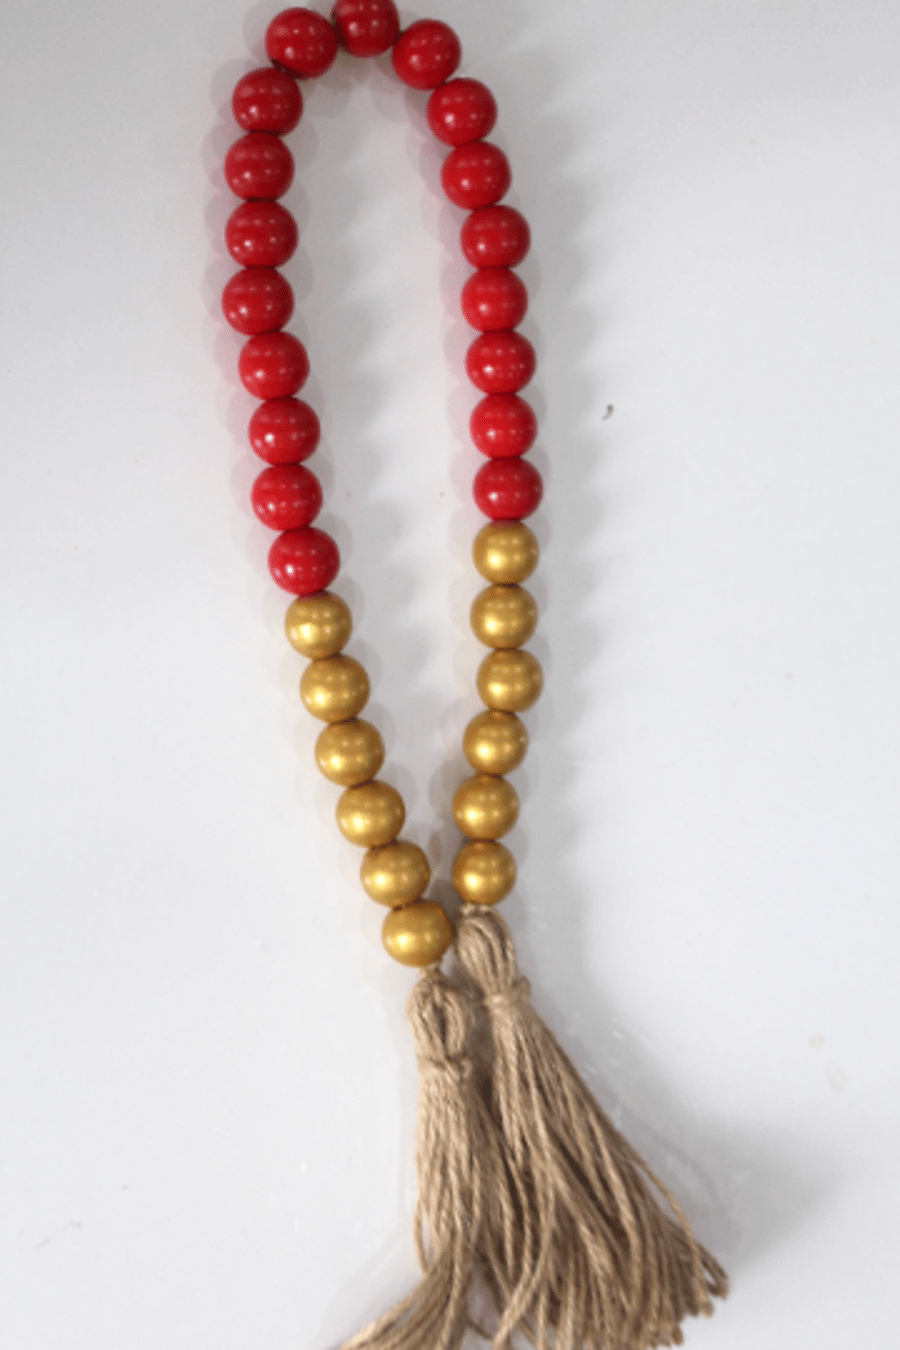 wooden bead garland with jute tassels, boho home decor